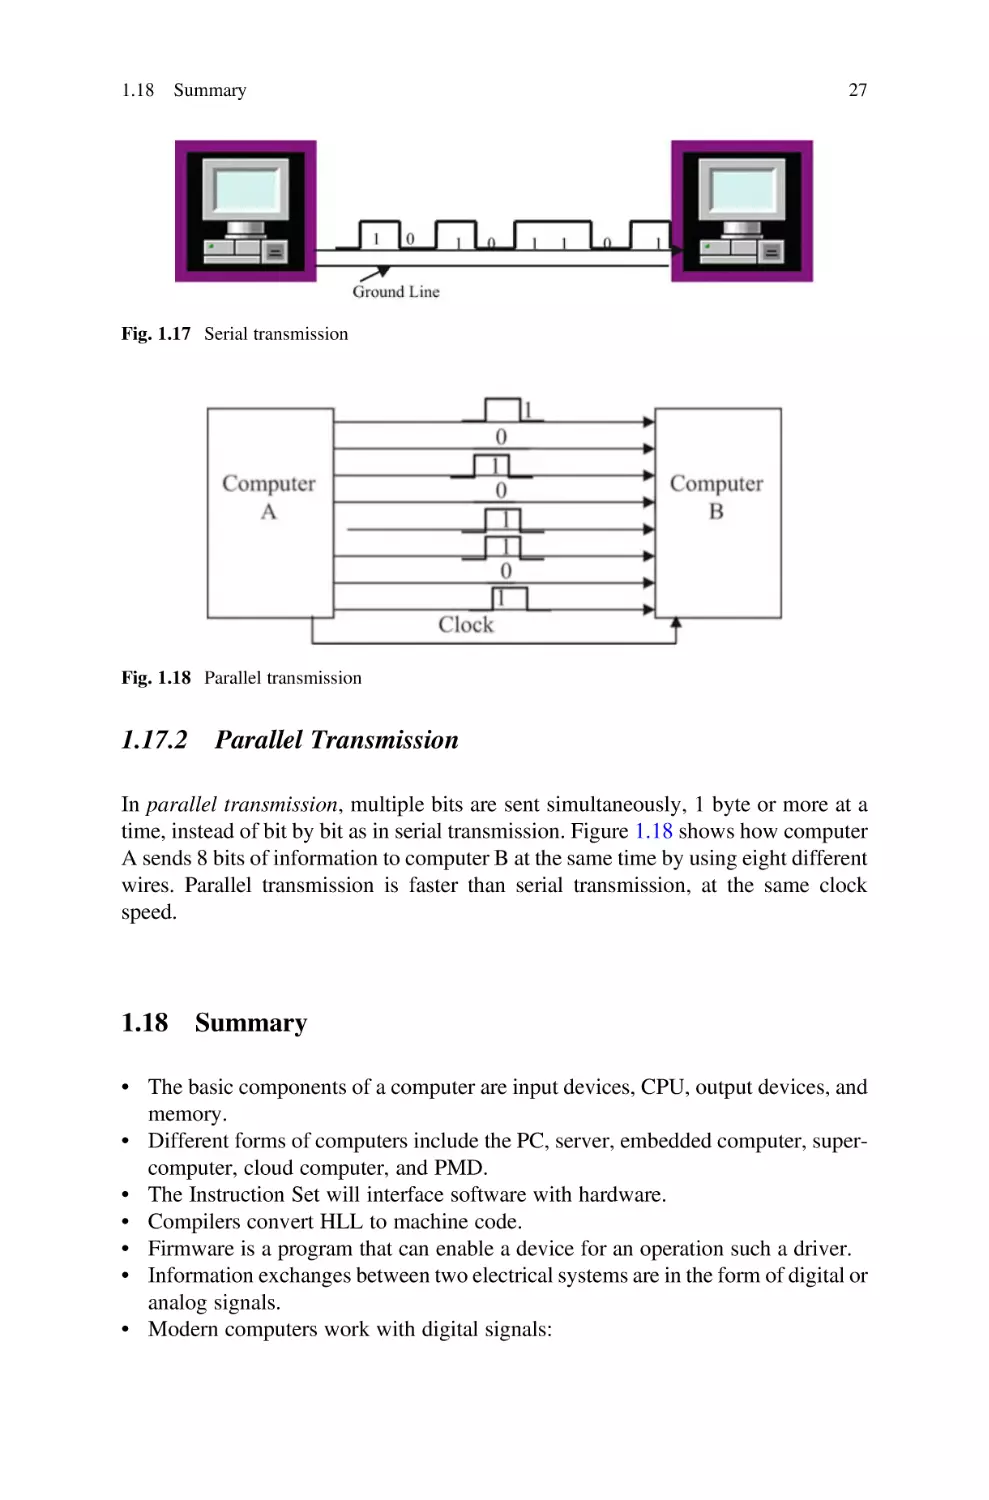 1.17.2 Parallel Transmission
1.18 Summary